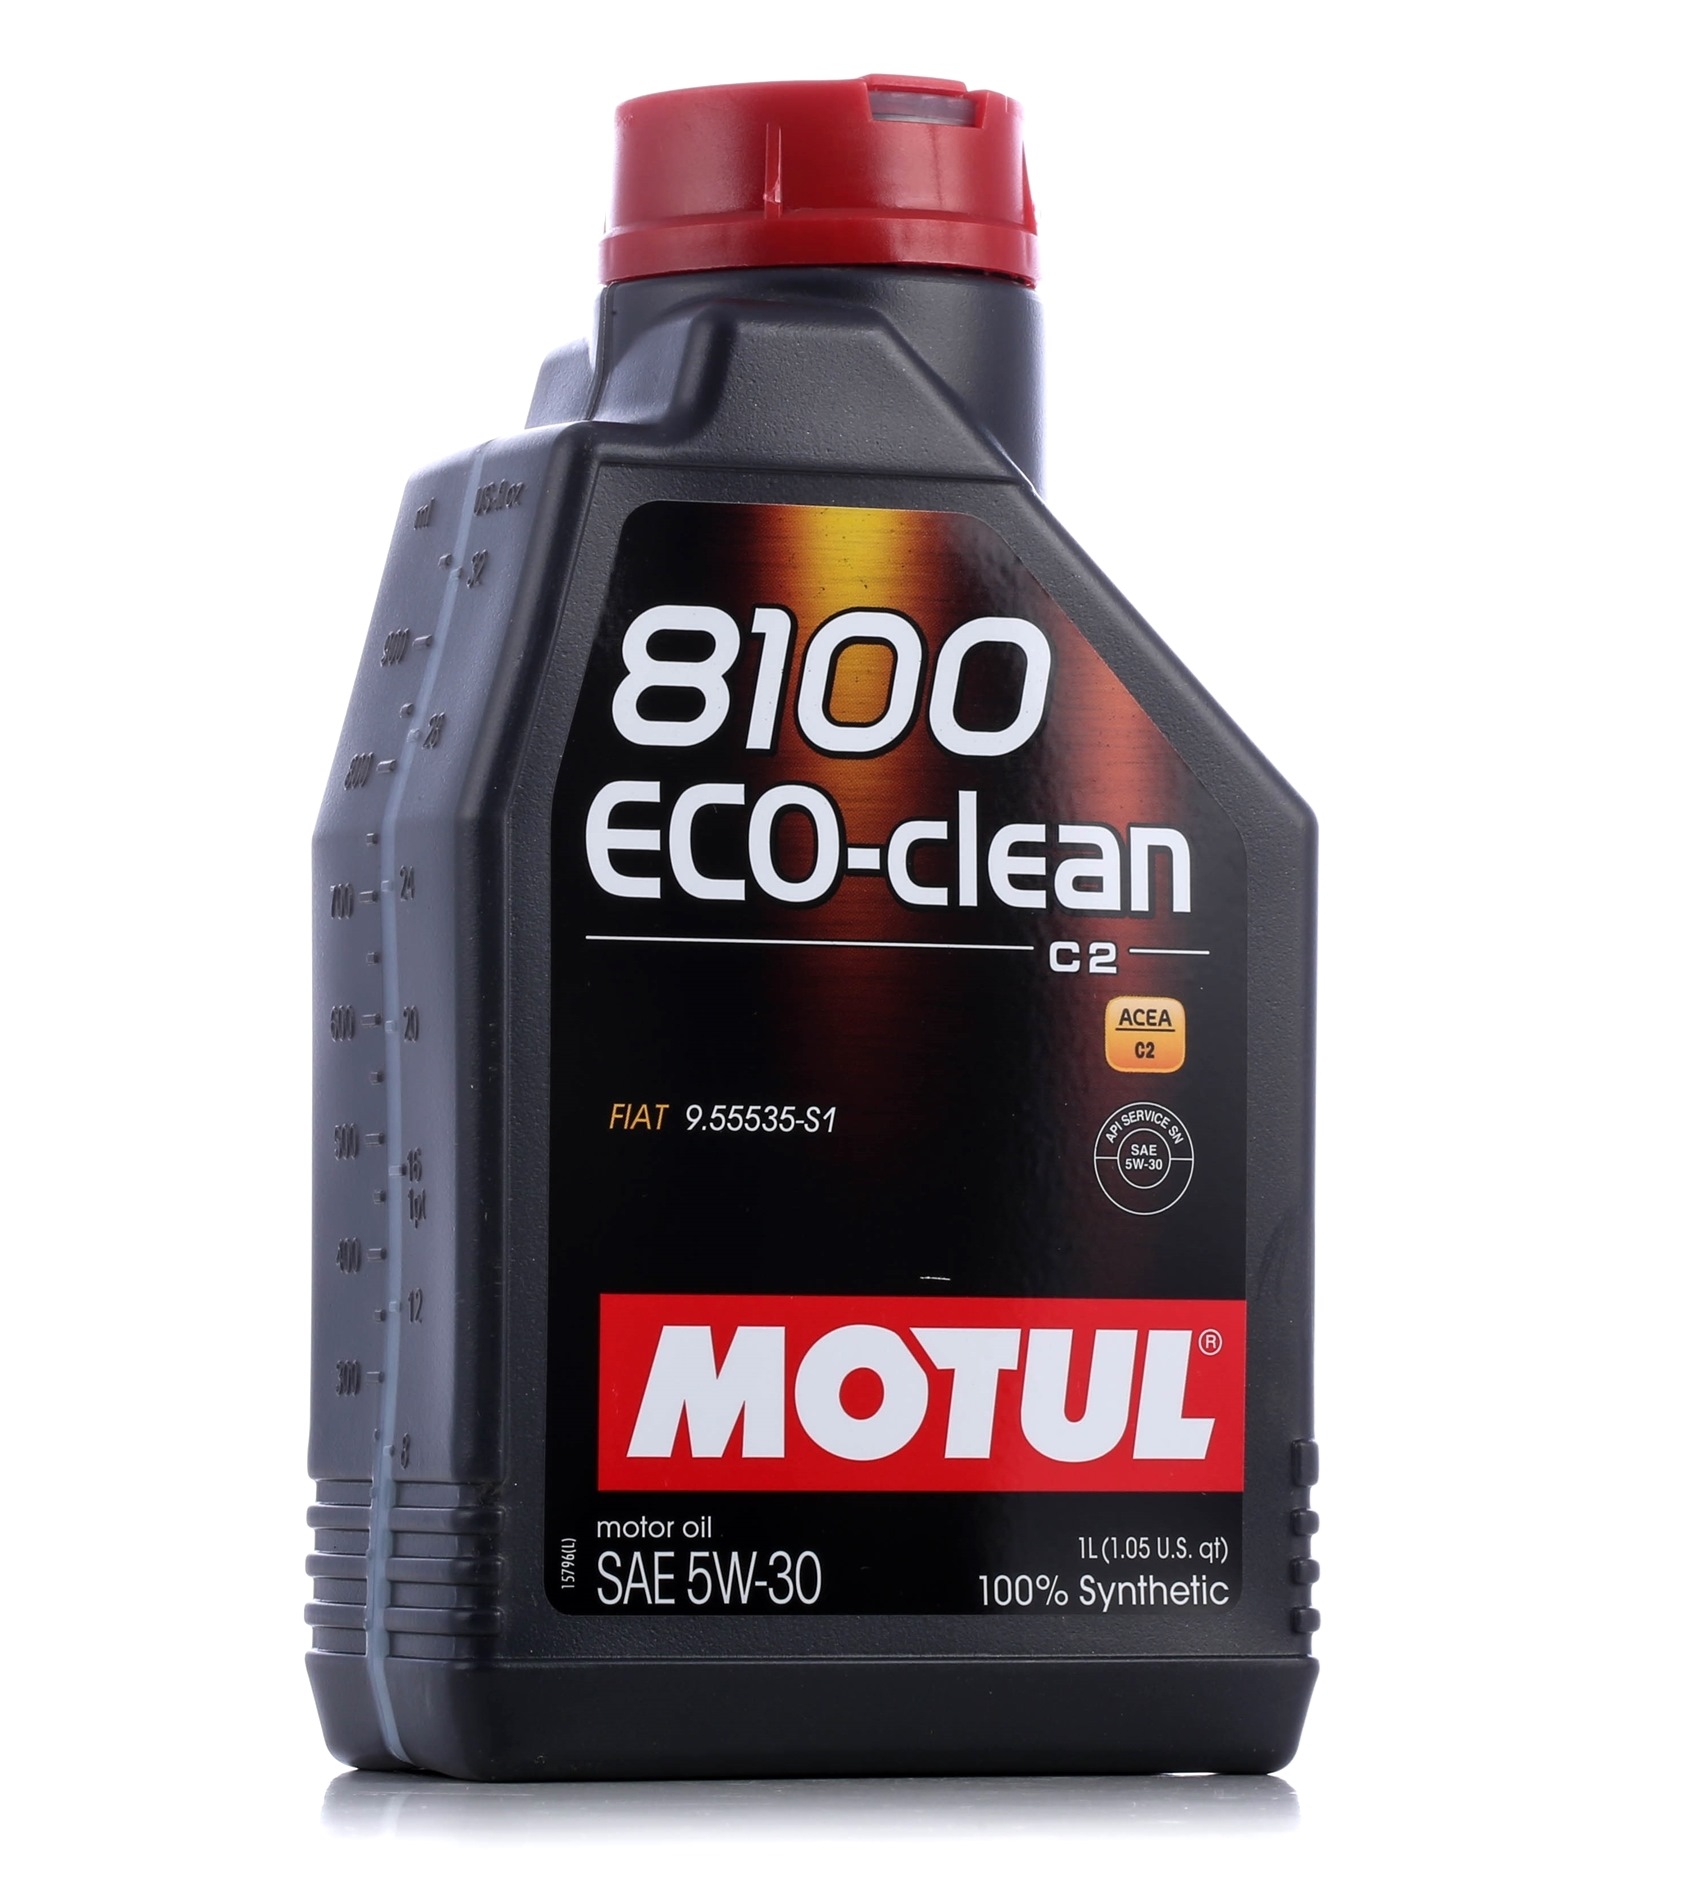 Motor oil Fiat 9.55535-S1 MOTUL - 101542 8100, ECO-CLEAN